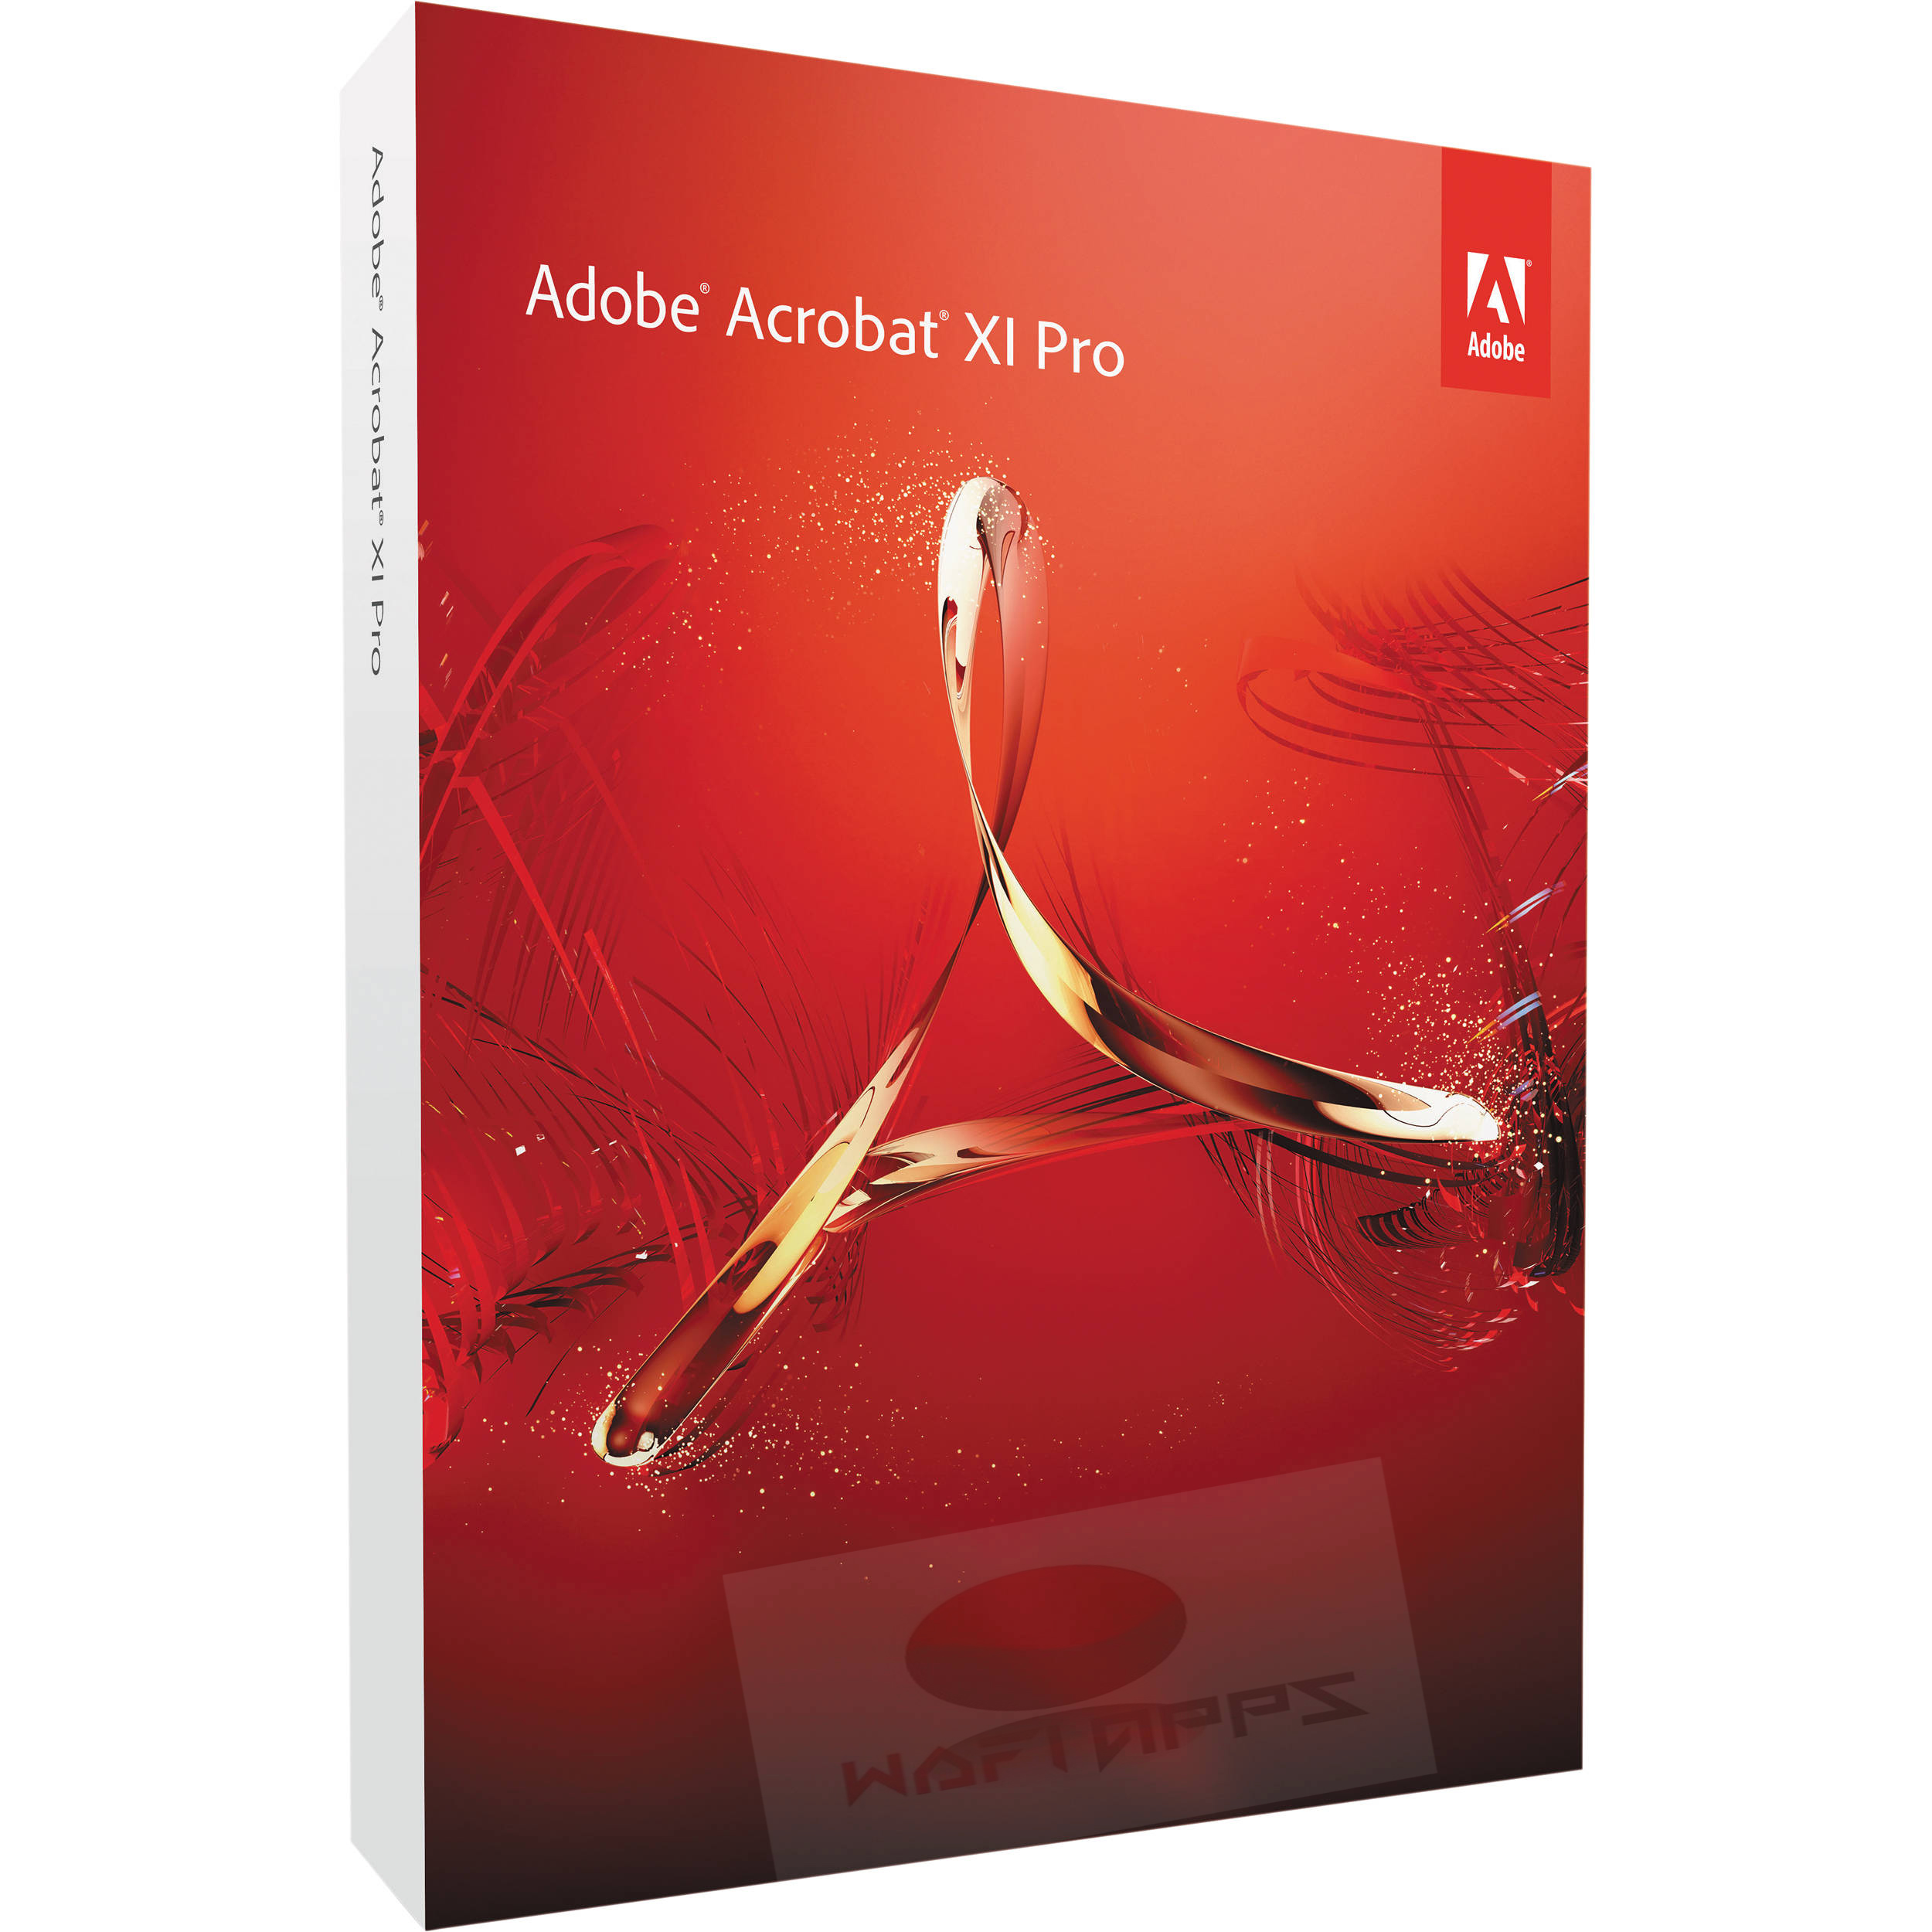 Adobe Framemaker free. download full Version With Crack